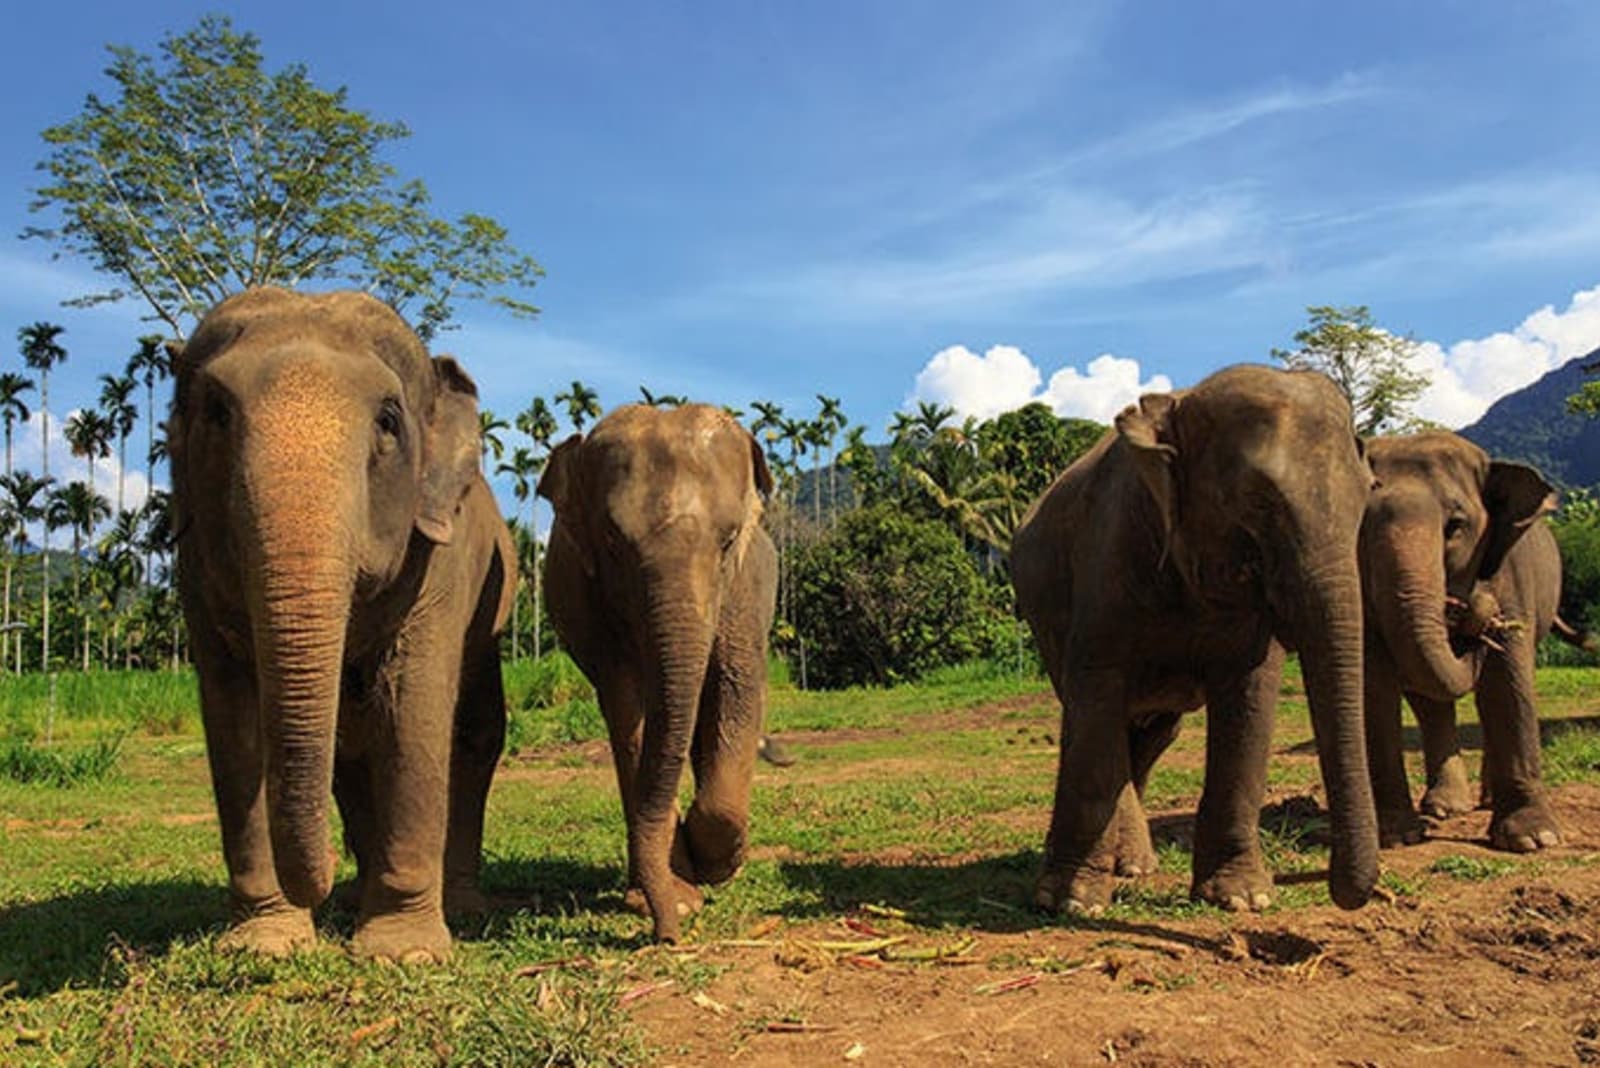 h2-ethical-elephant-experience-at-elephant-hills-luxury-tented-camp-khao-sok-national-park-thailand-.jpeg